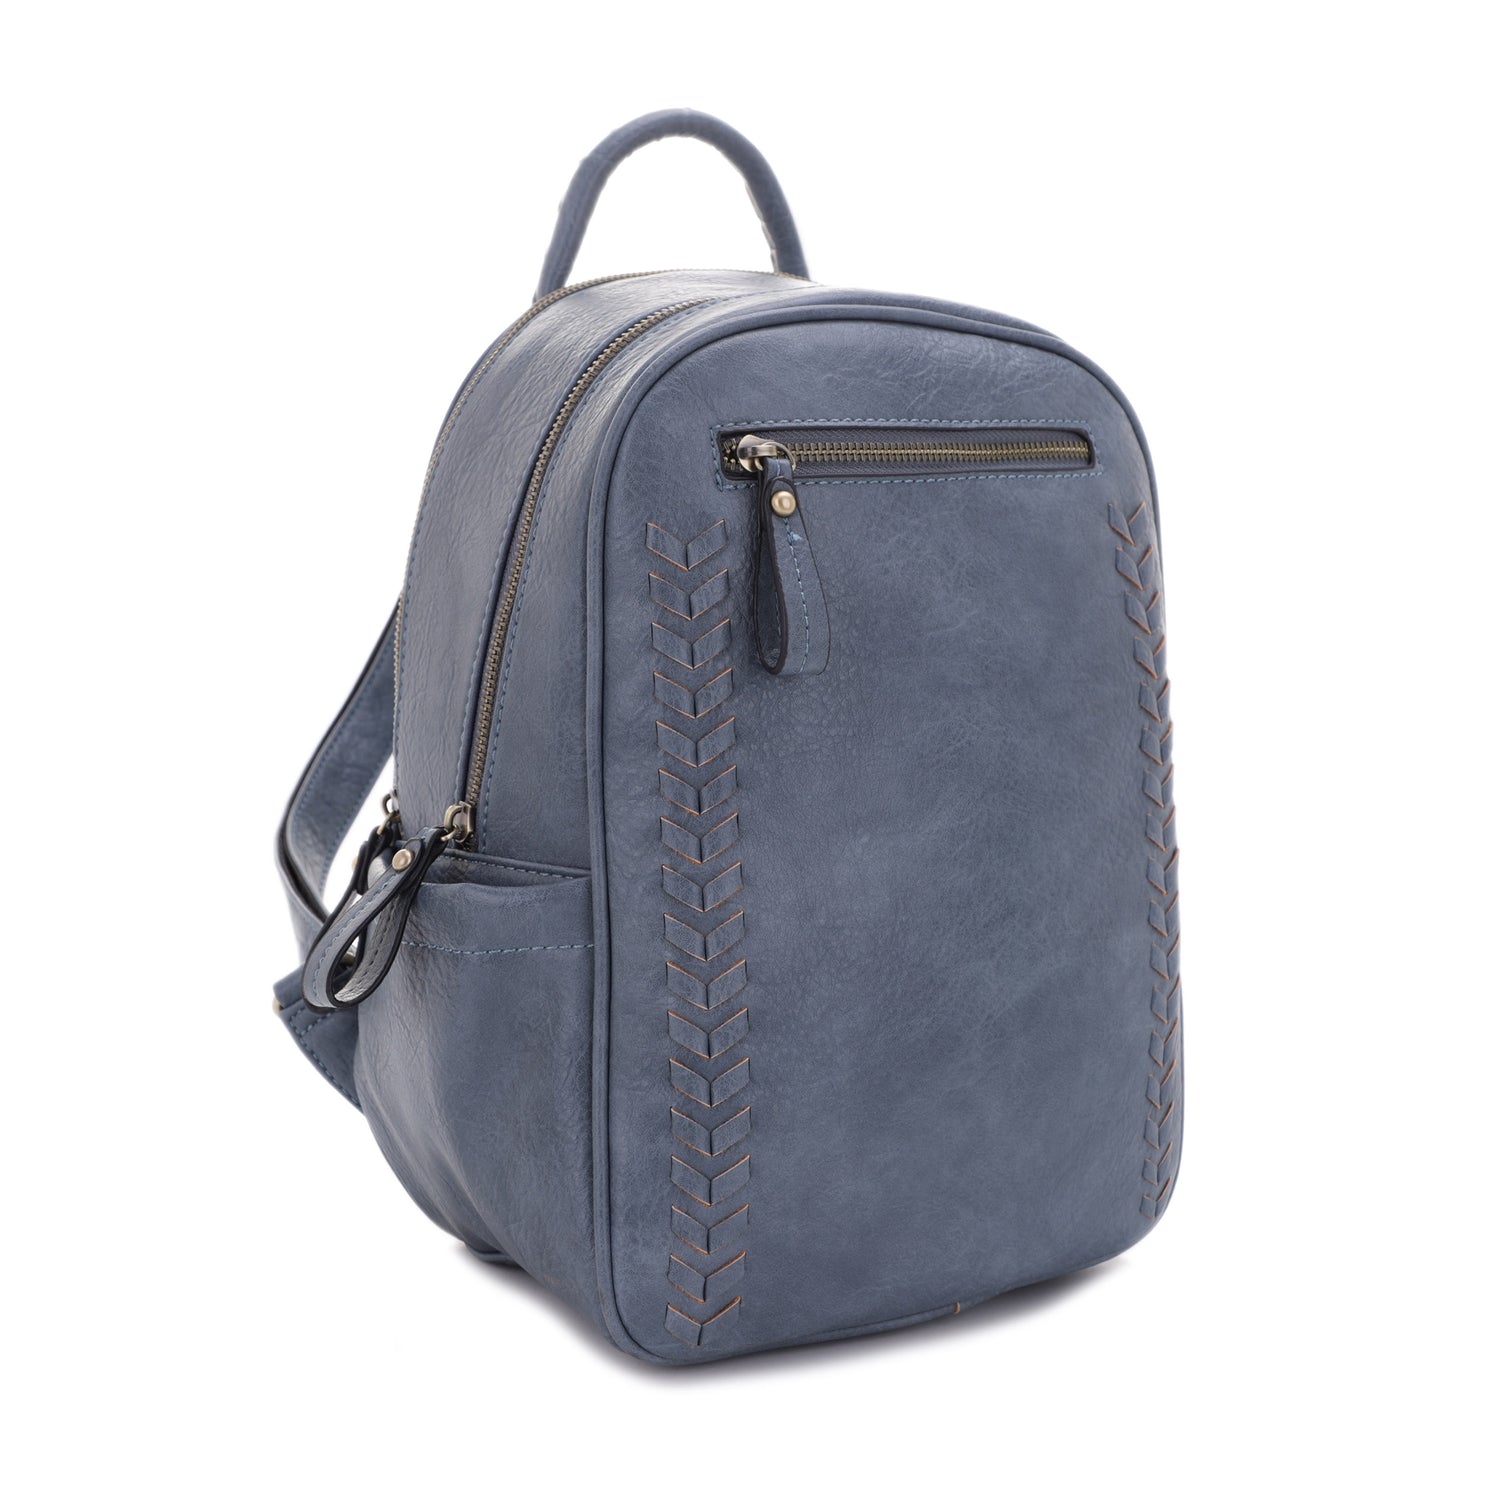 Backpacks - JessieJames Handbags